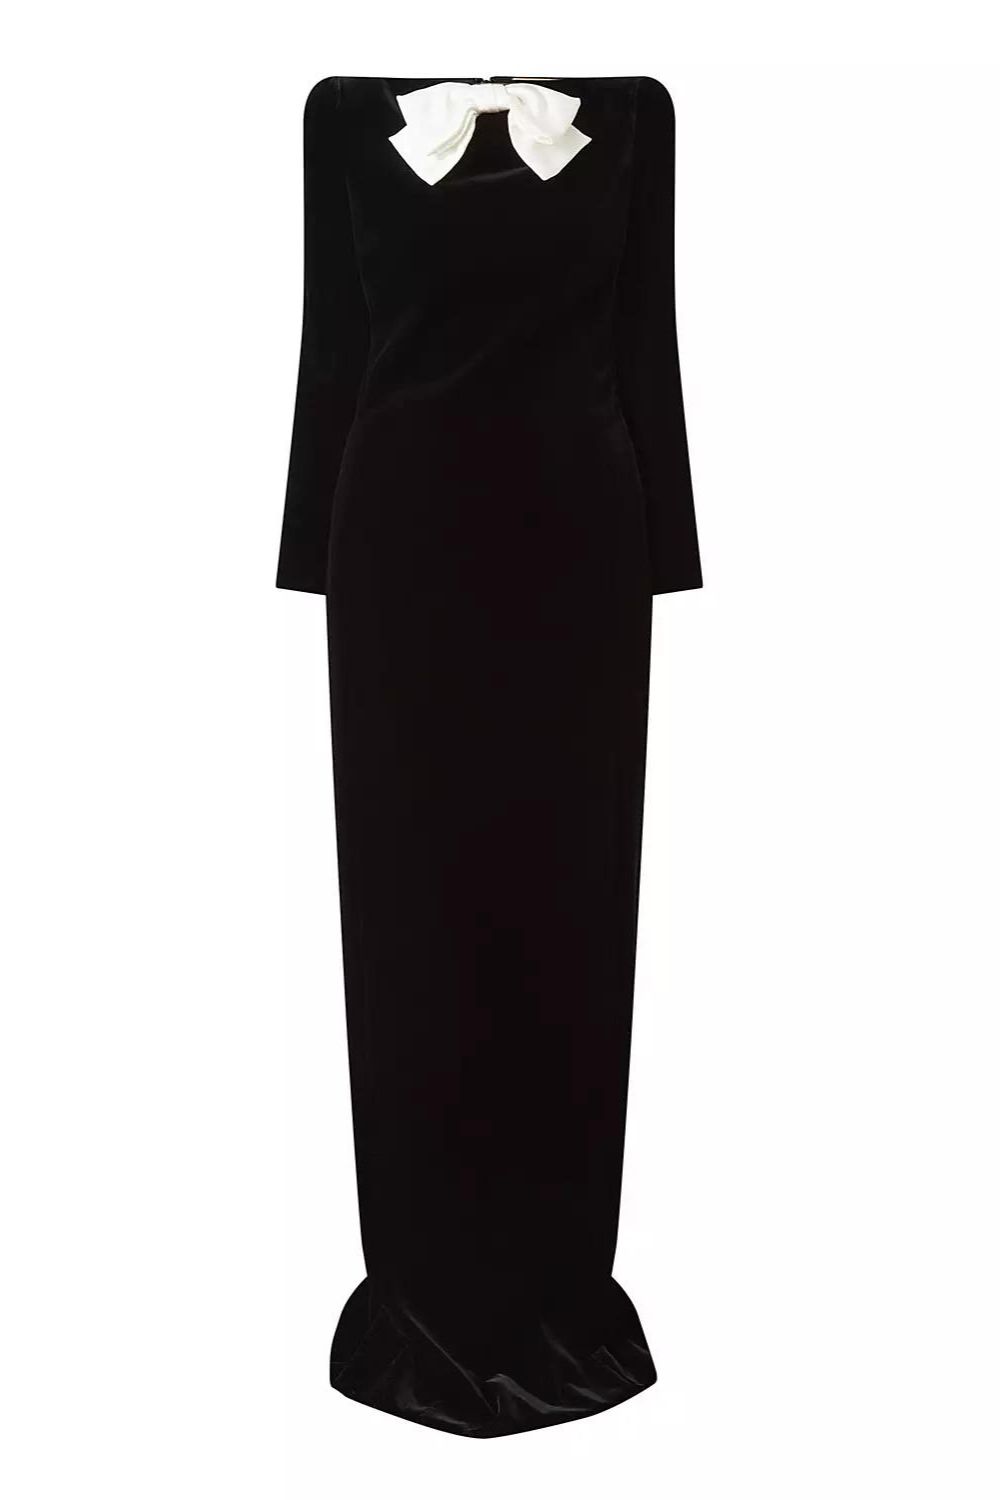 The-Gloss-Magazine-best-black-tie-dresses-3